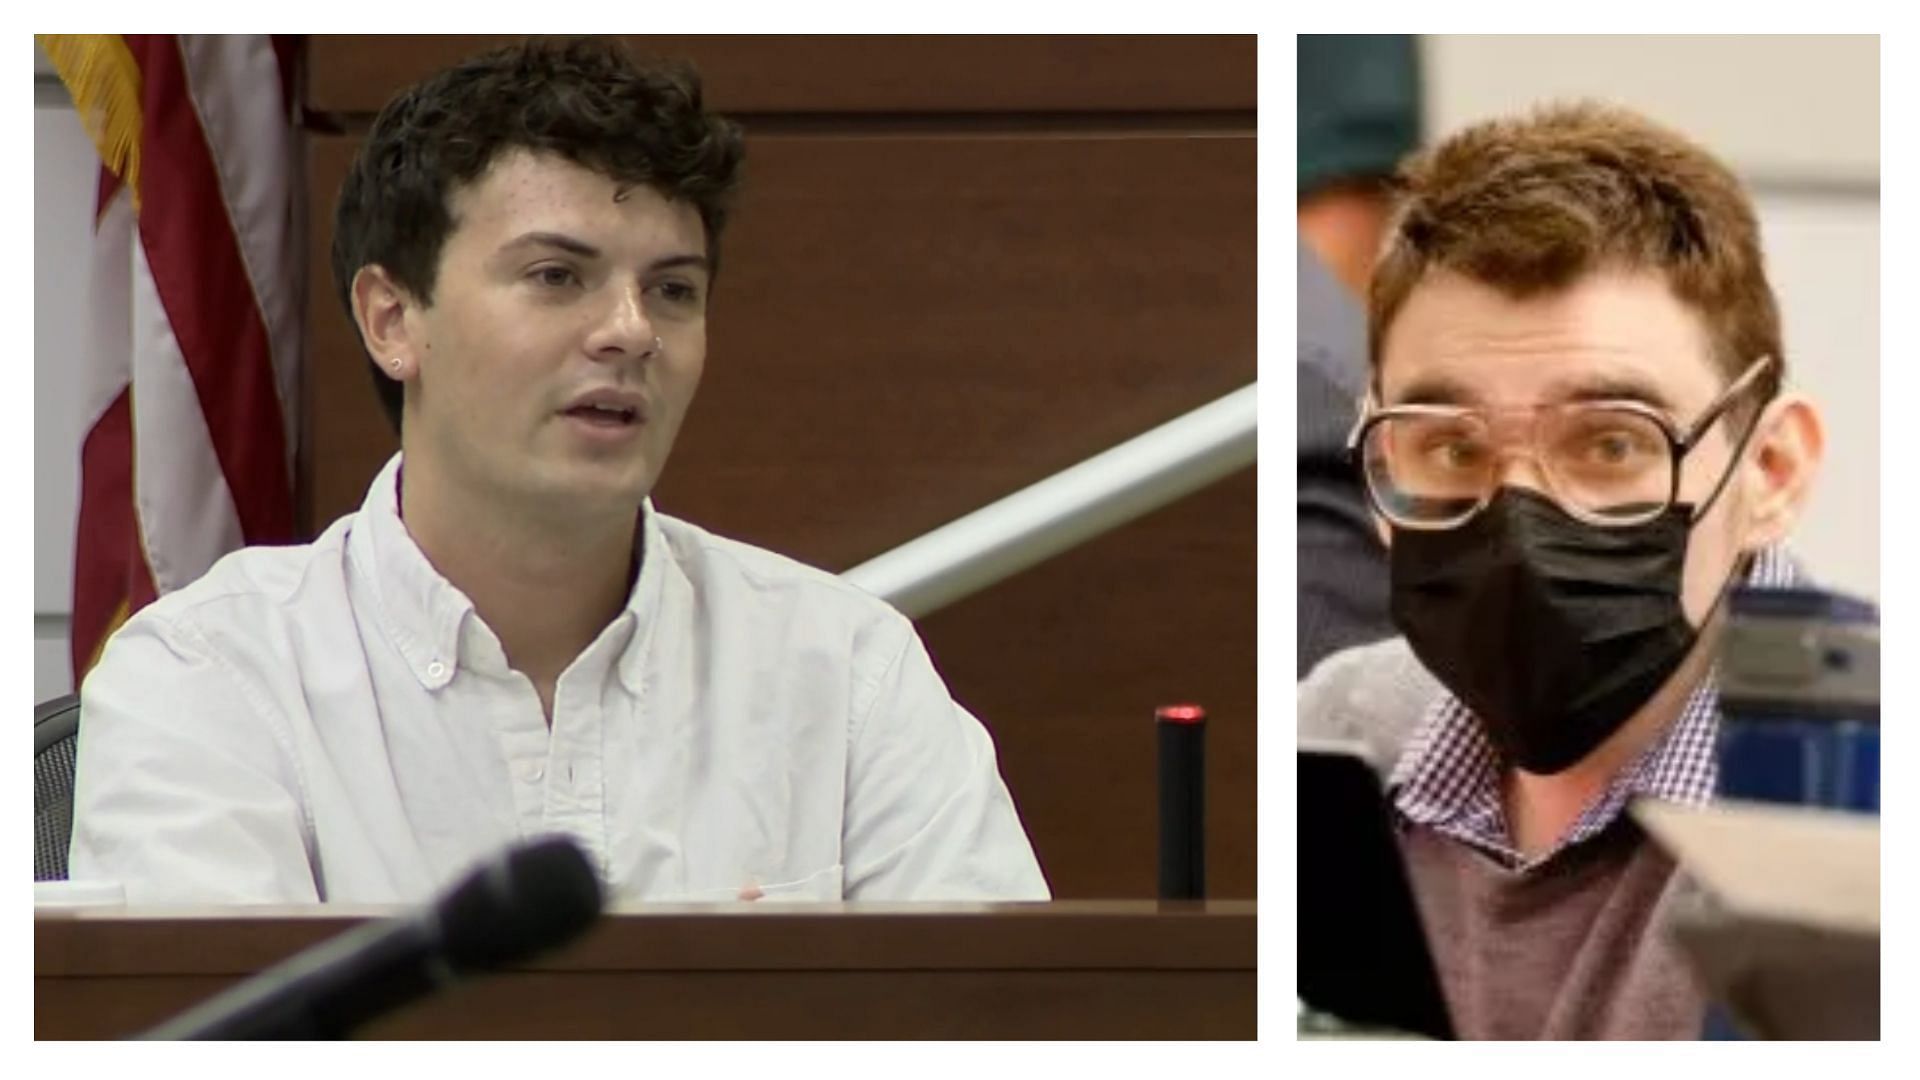 Dylan Kraemer (left) testified against Nikolas Cruz during the Parkland shooter sentencing trial (Images via Getty Images)